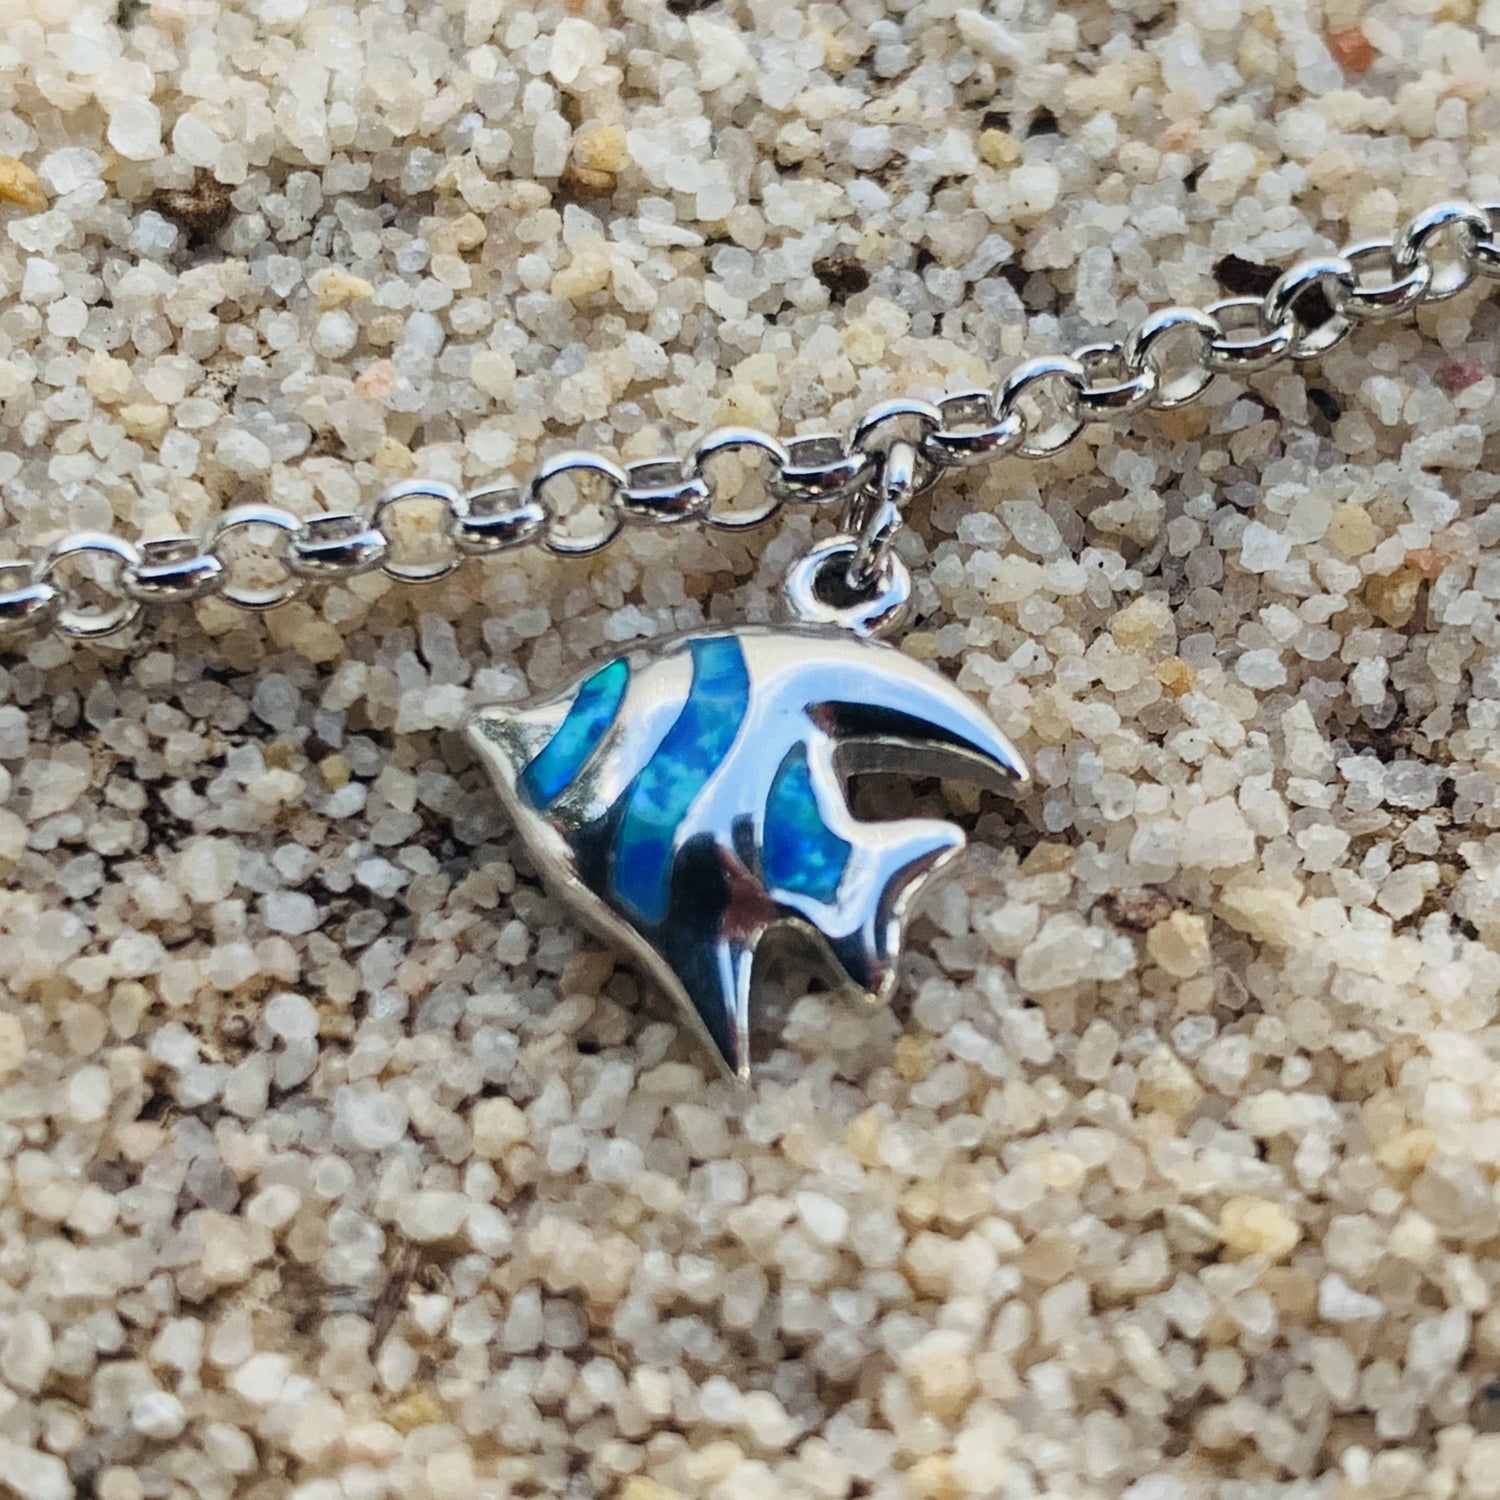 Sea life charm bracelet showing fish charm.